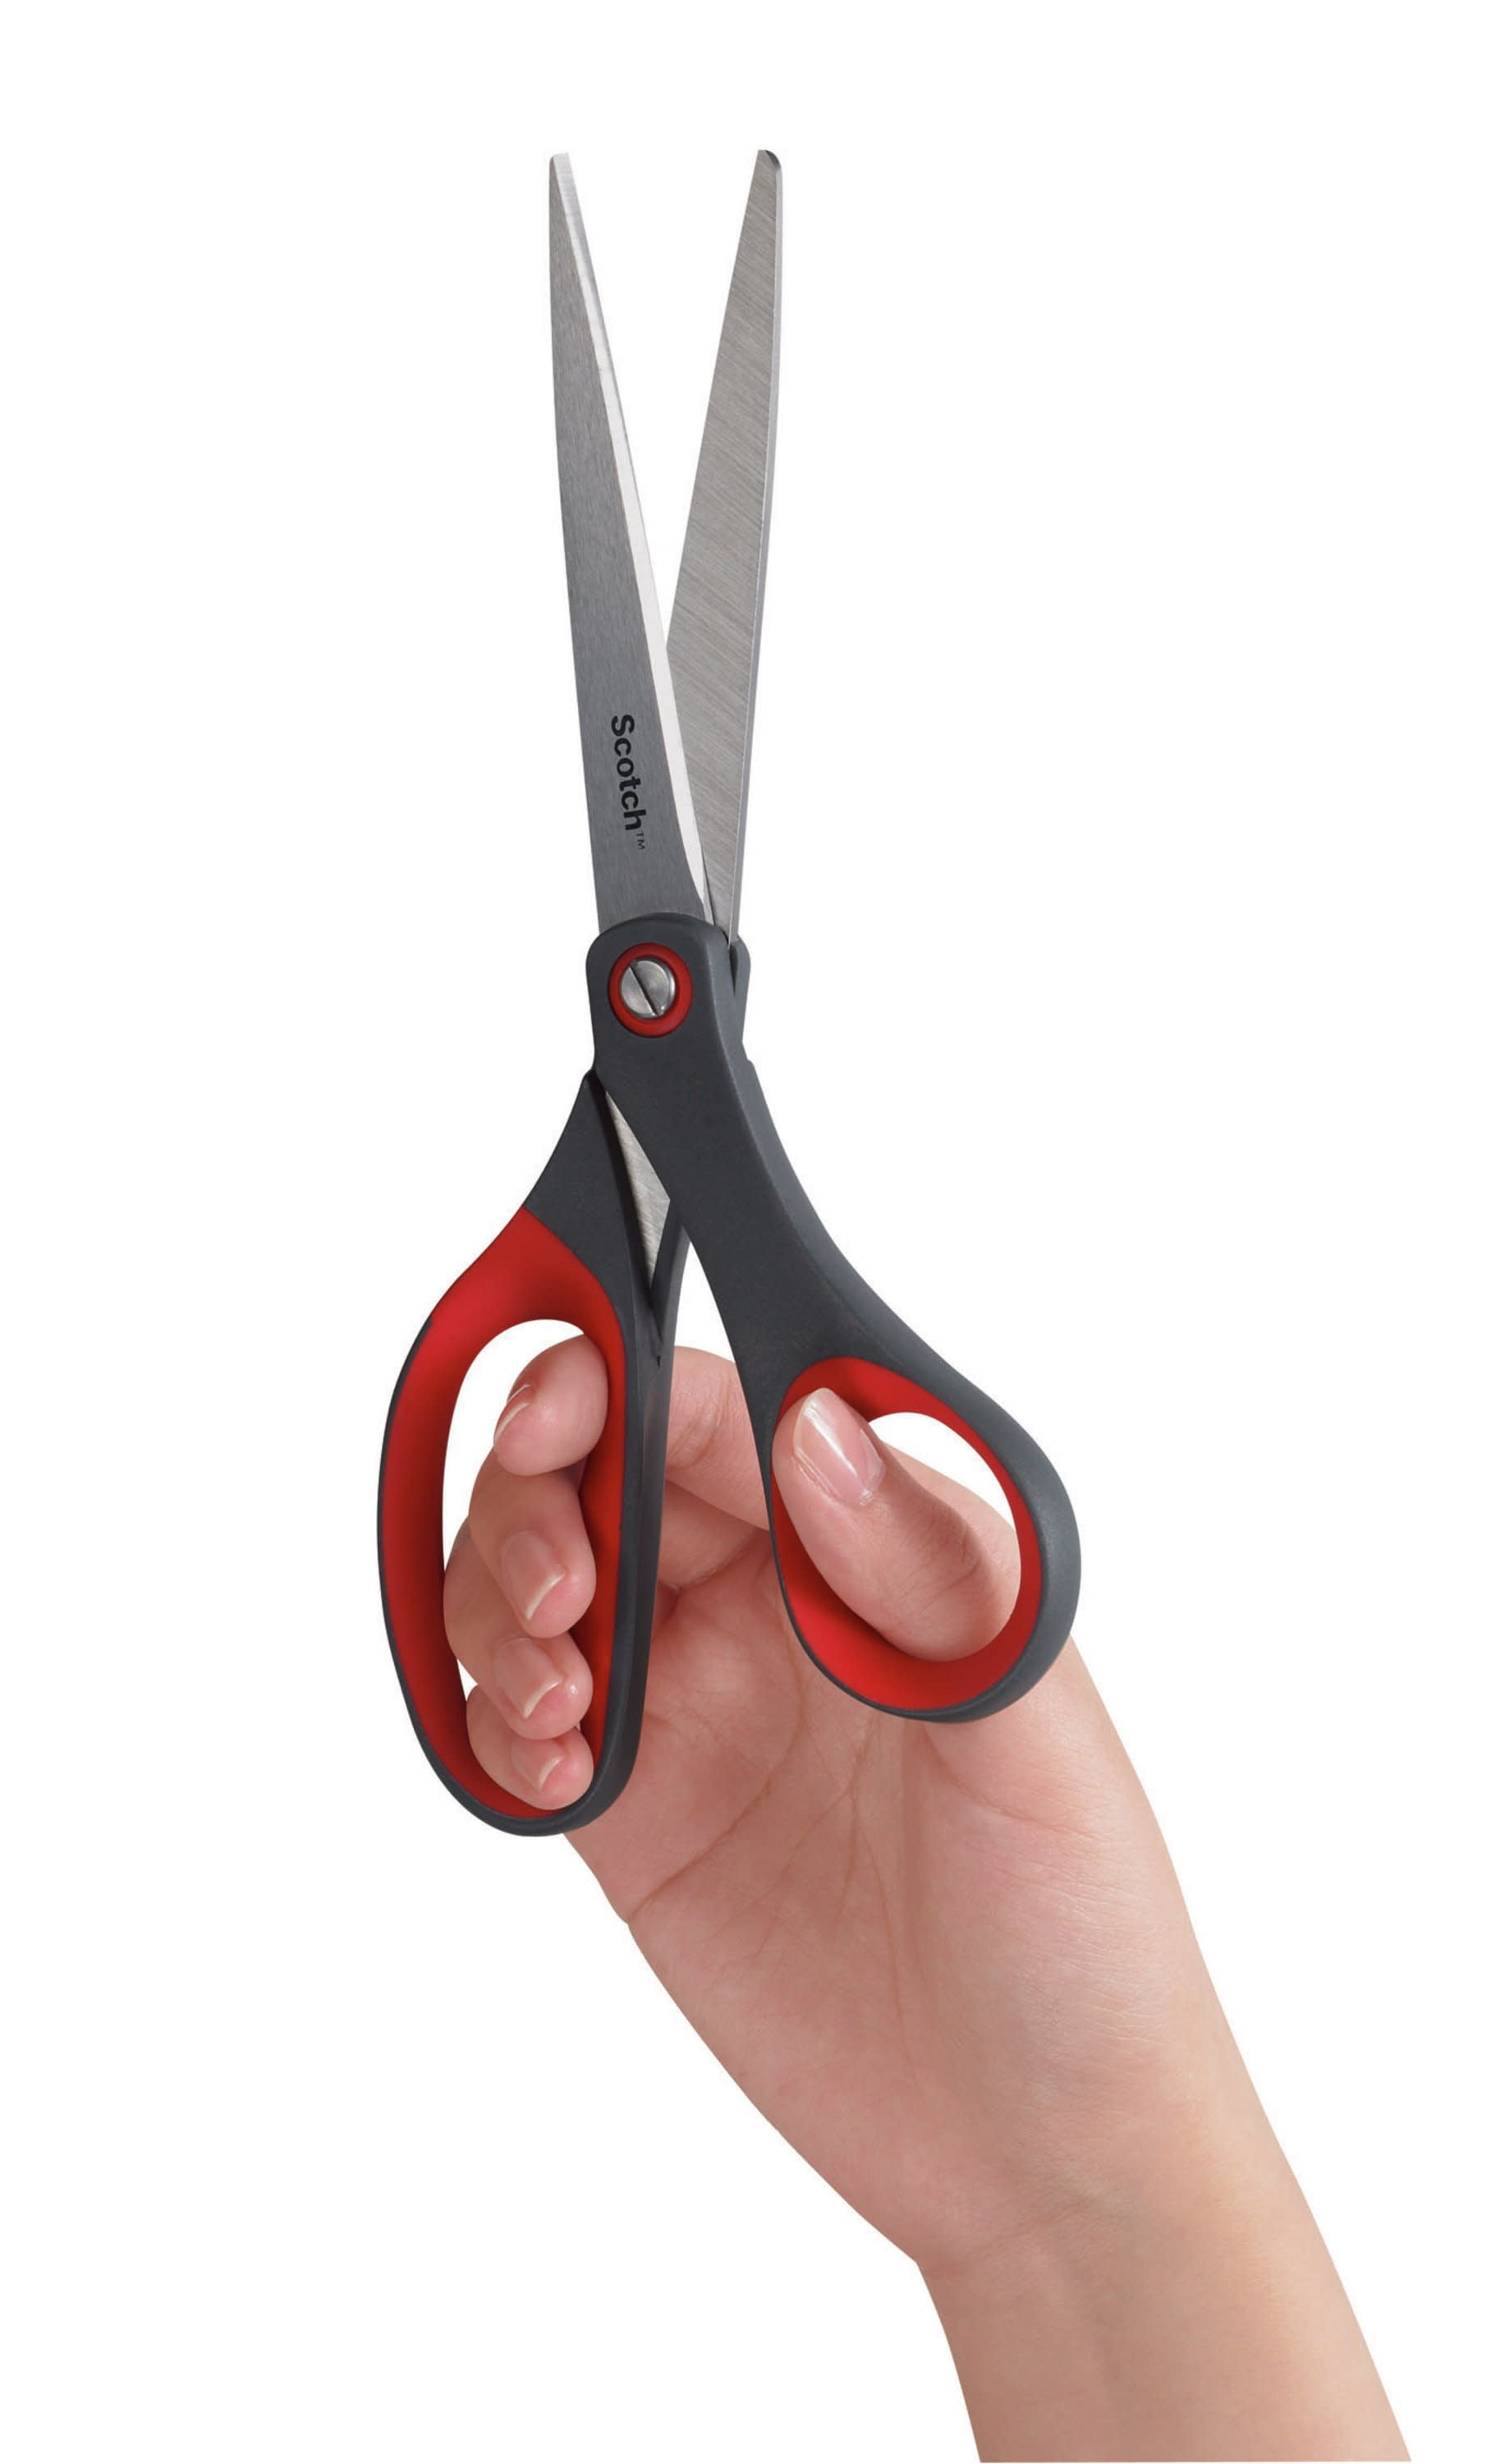 Non Stick Scissors All Purpose Stainless Steel Craft Scissors